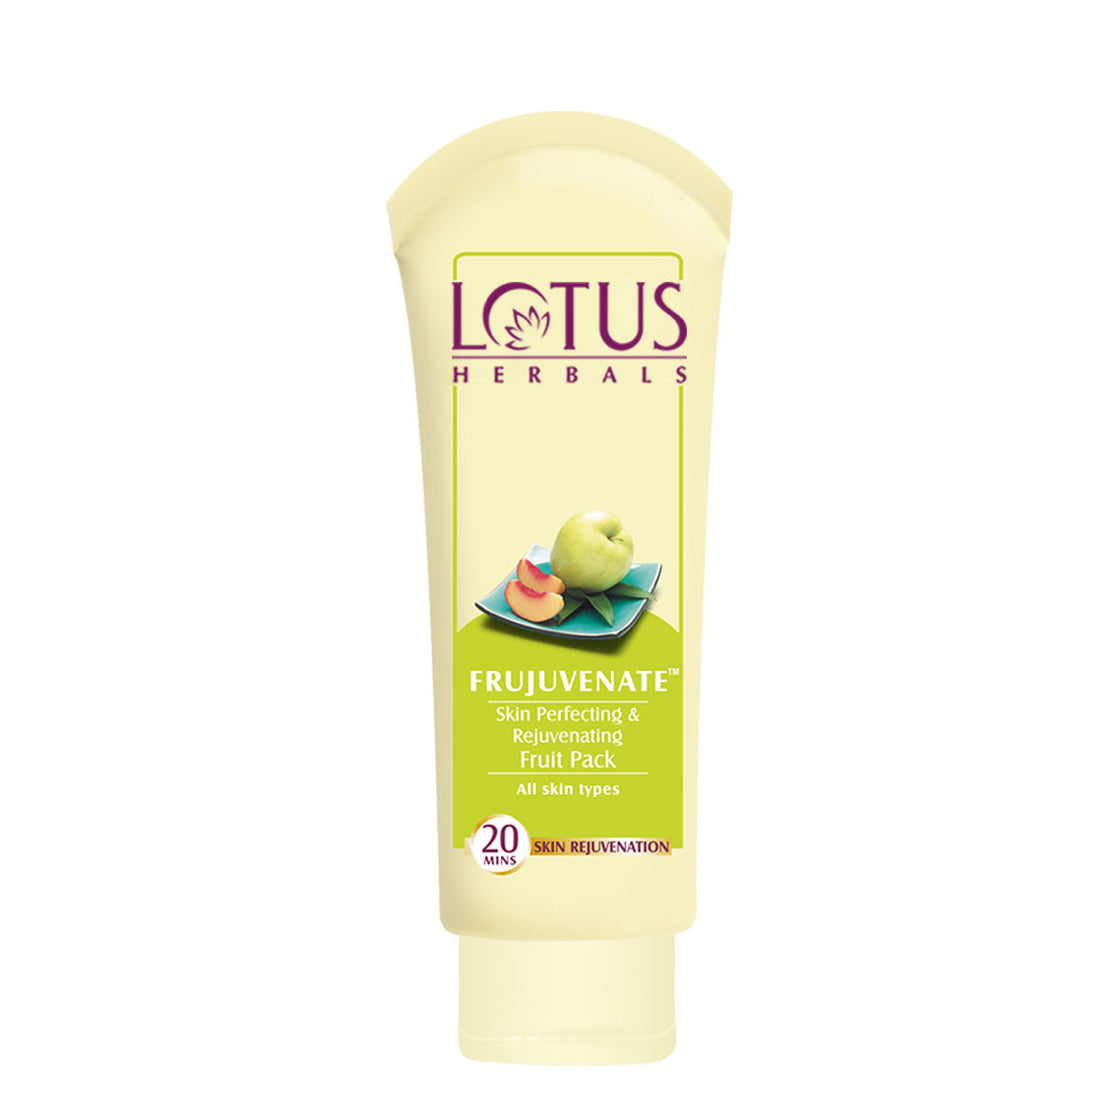 Lotus Herbals Frujuvenate Skin Perfecting & Rejuvenating Fruit Pack (120g)